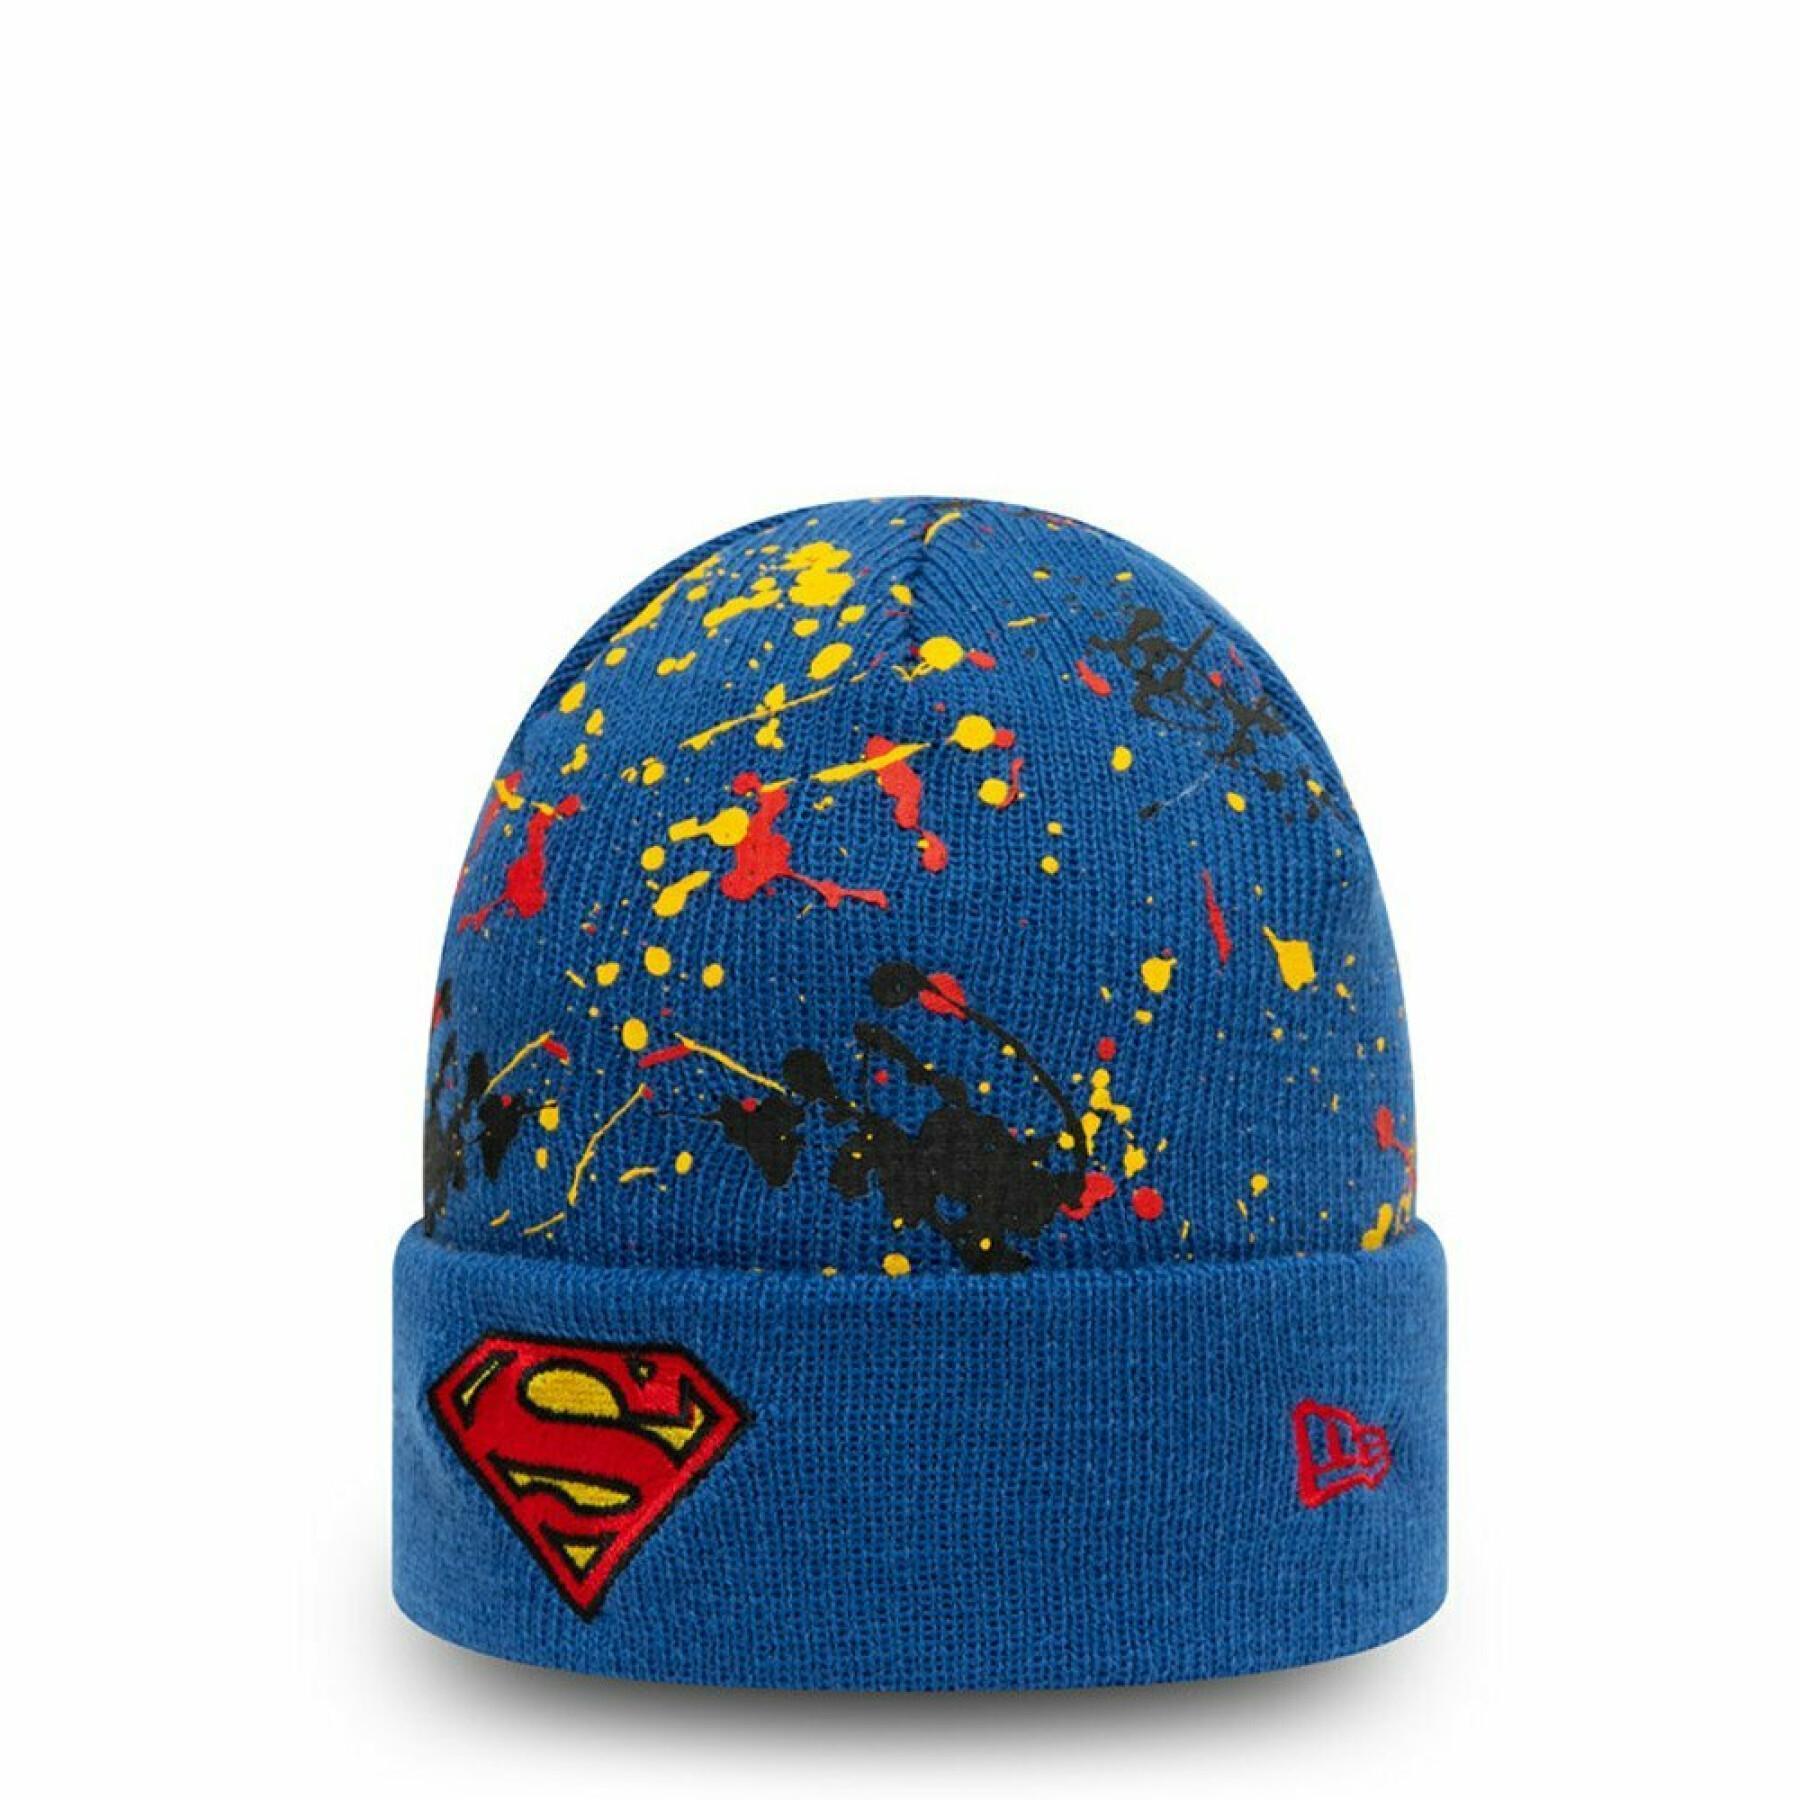 Cappello per bambini New Era Paint Splat Cuff Superman